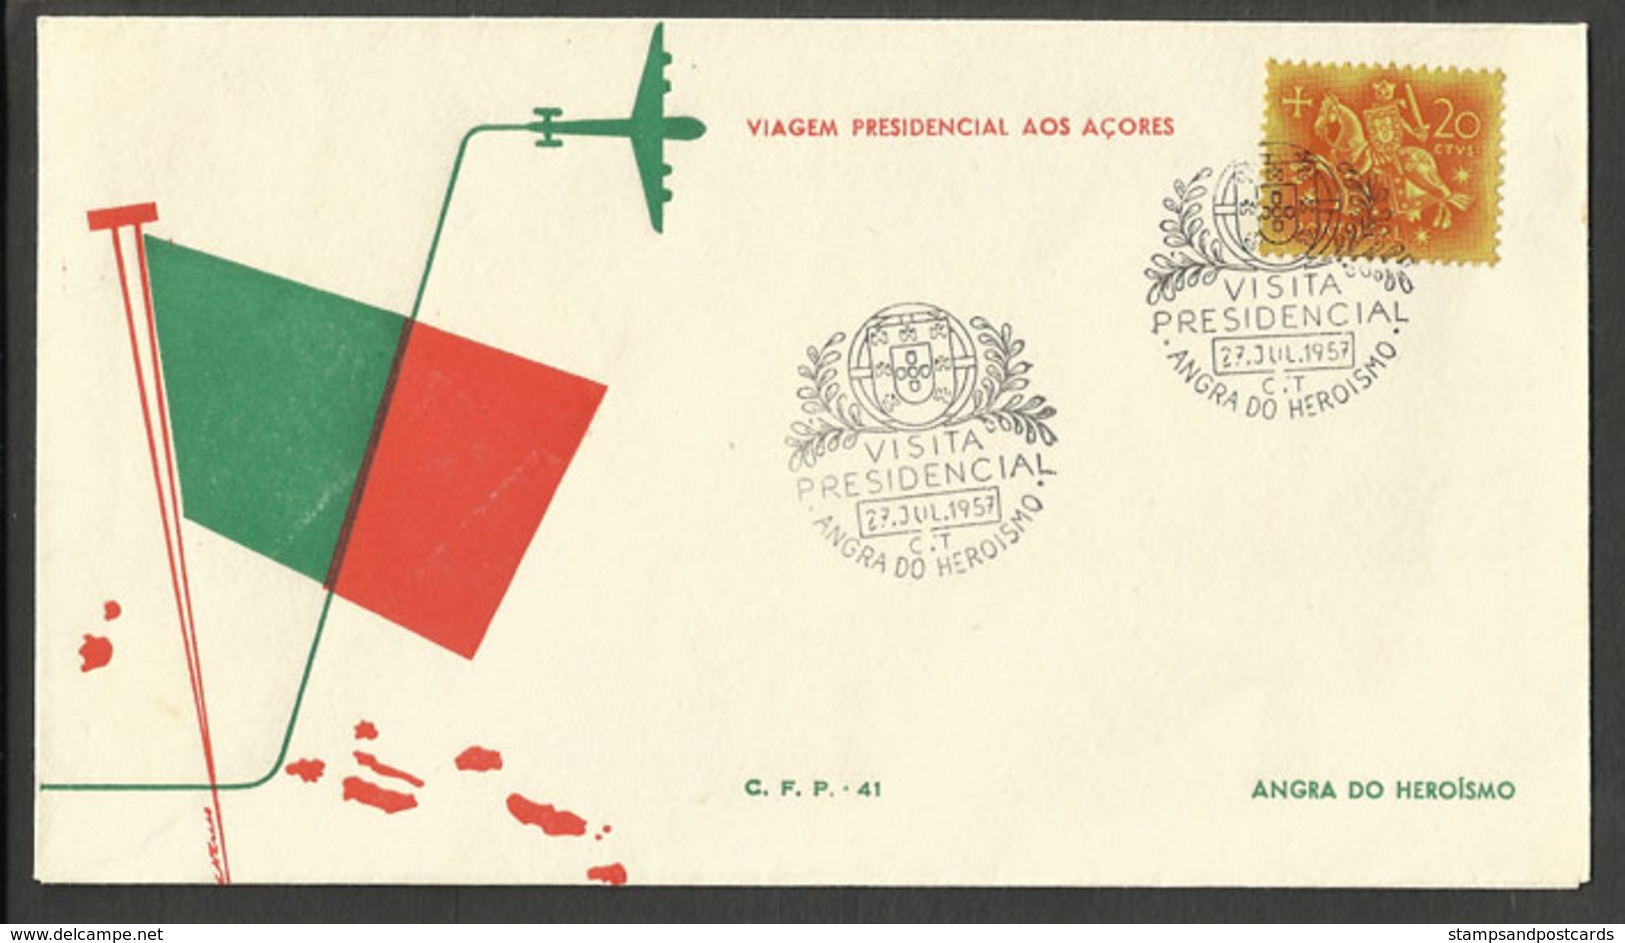 Portugal Voyage Présidentiel Açores 1957 Cachet Commemoratif Angra Do Heroismo Presidential Visit Azores Event Postmark - Flammes & Oblitérations